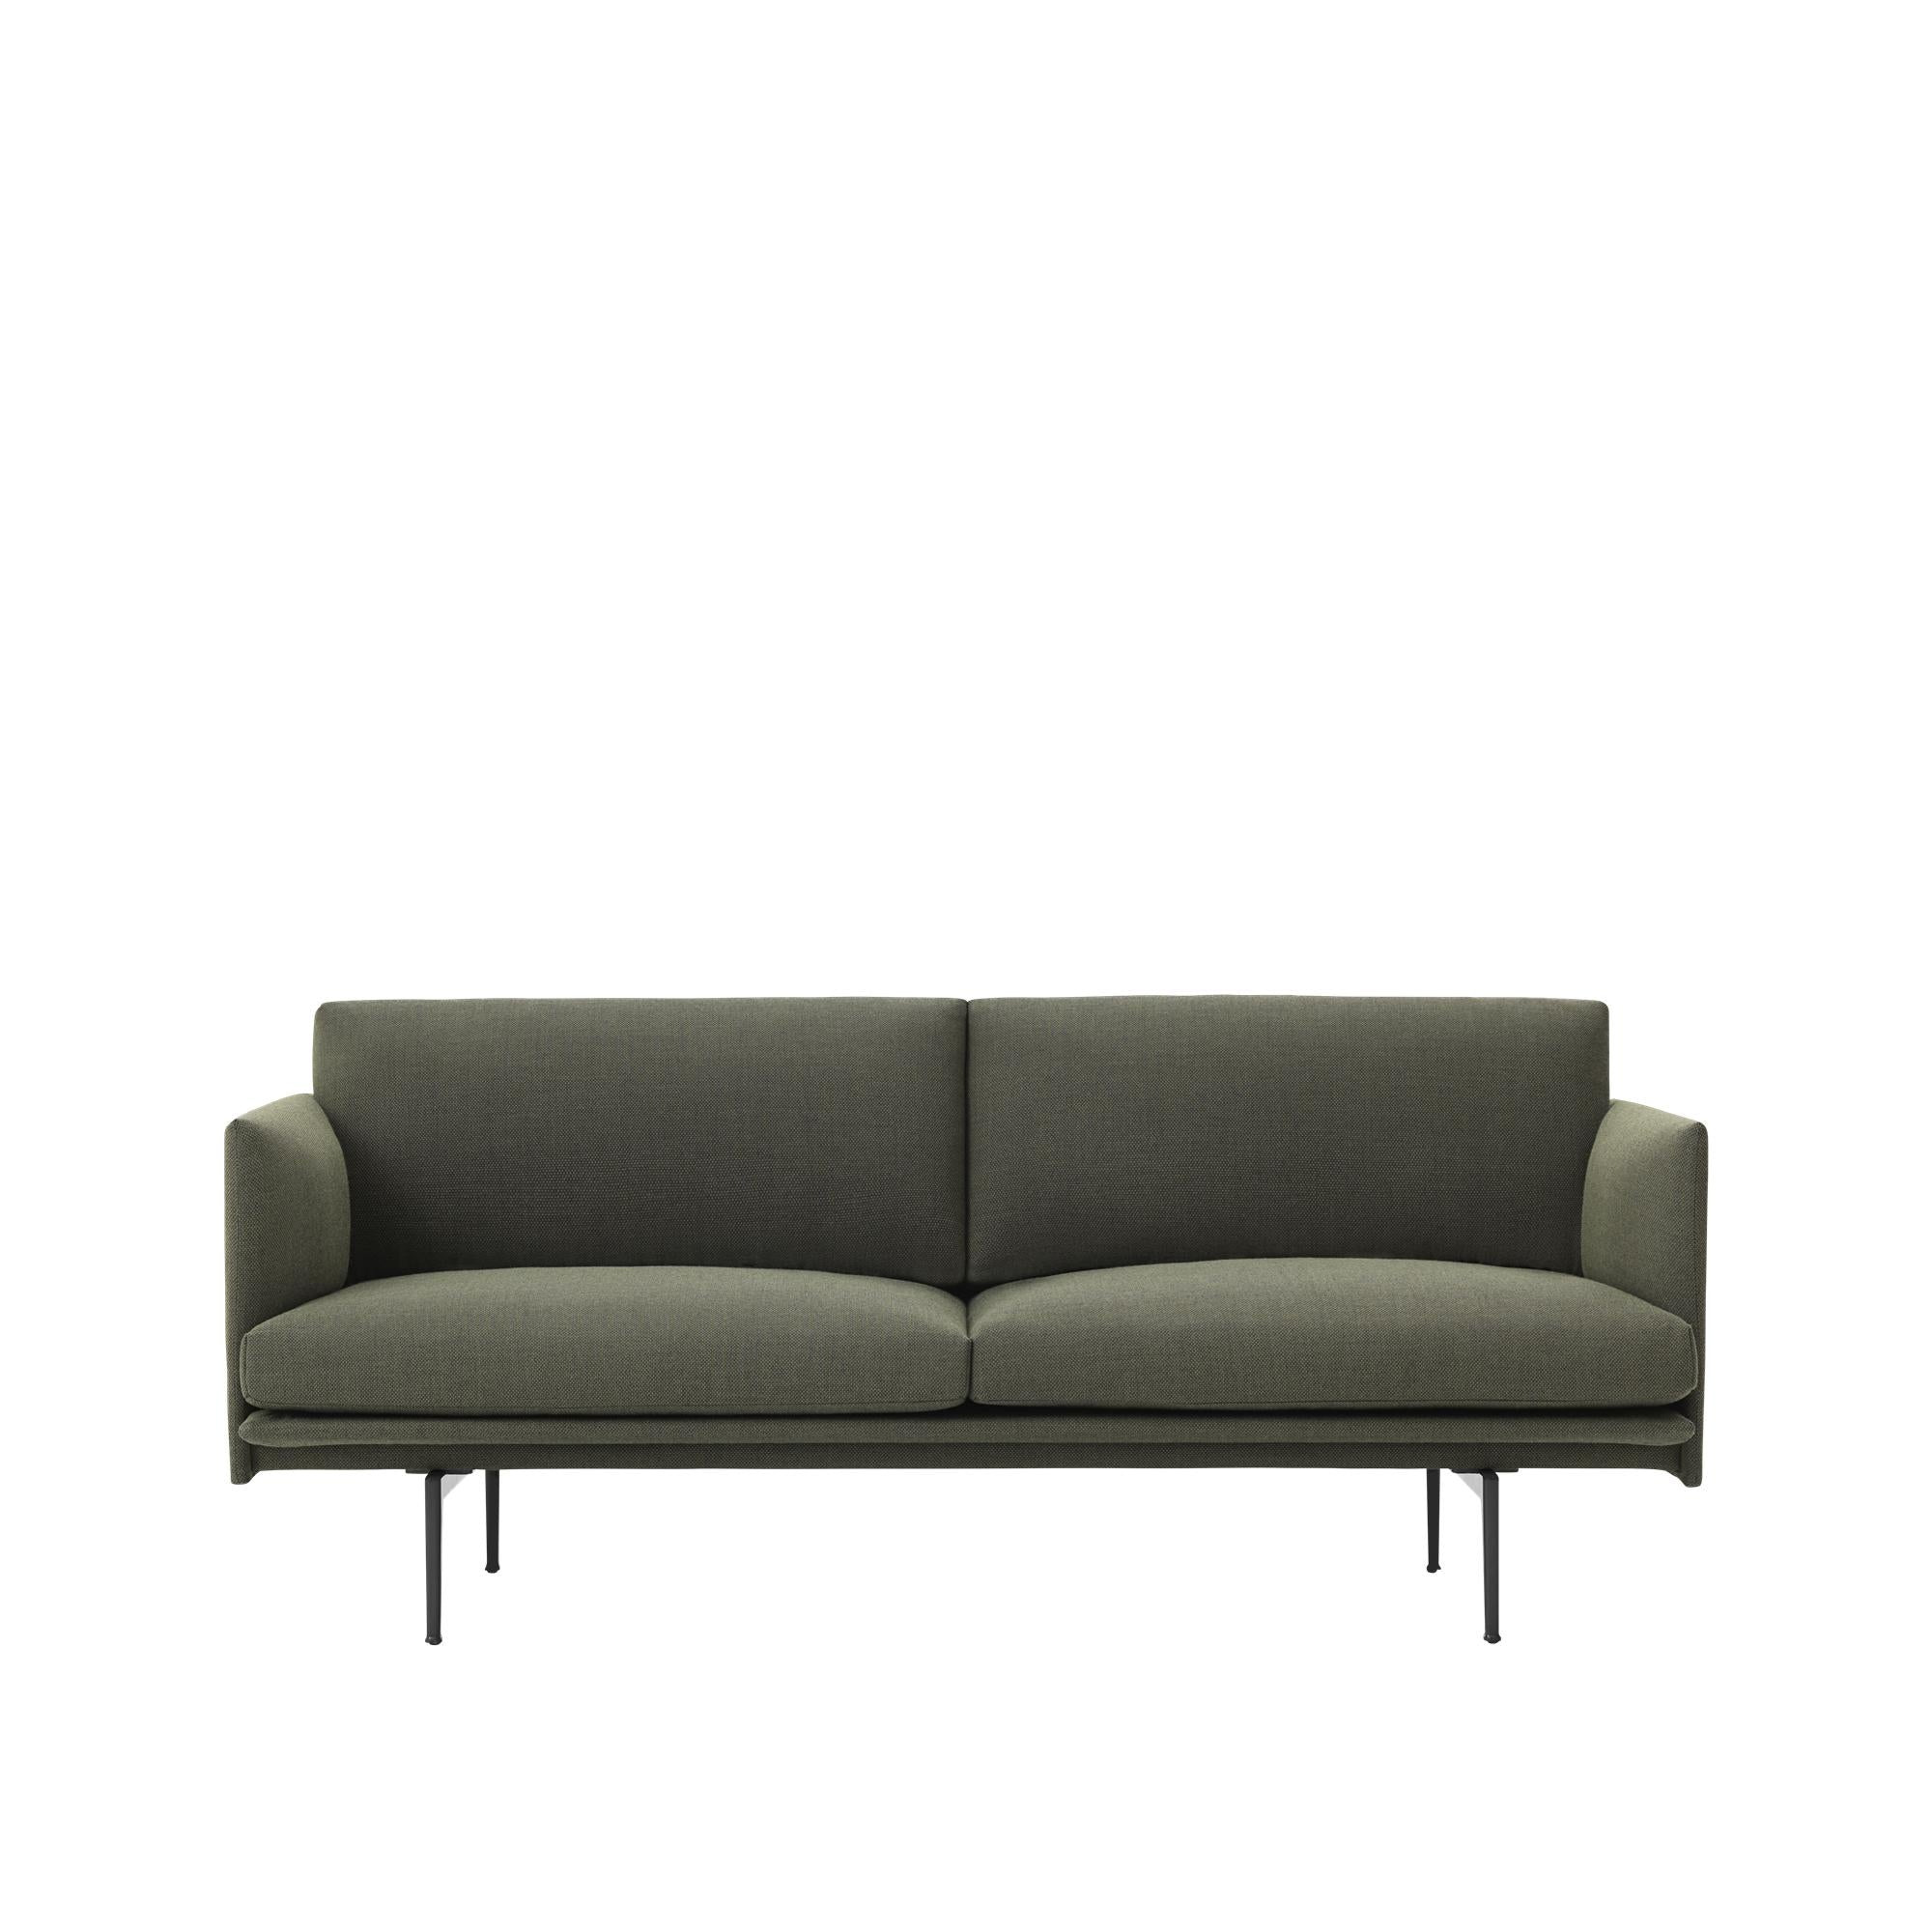 Muuto disposisjon sofa 2 seters, stoff, fiord 961